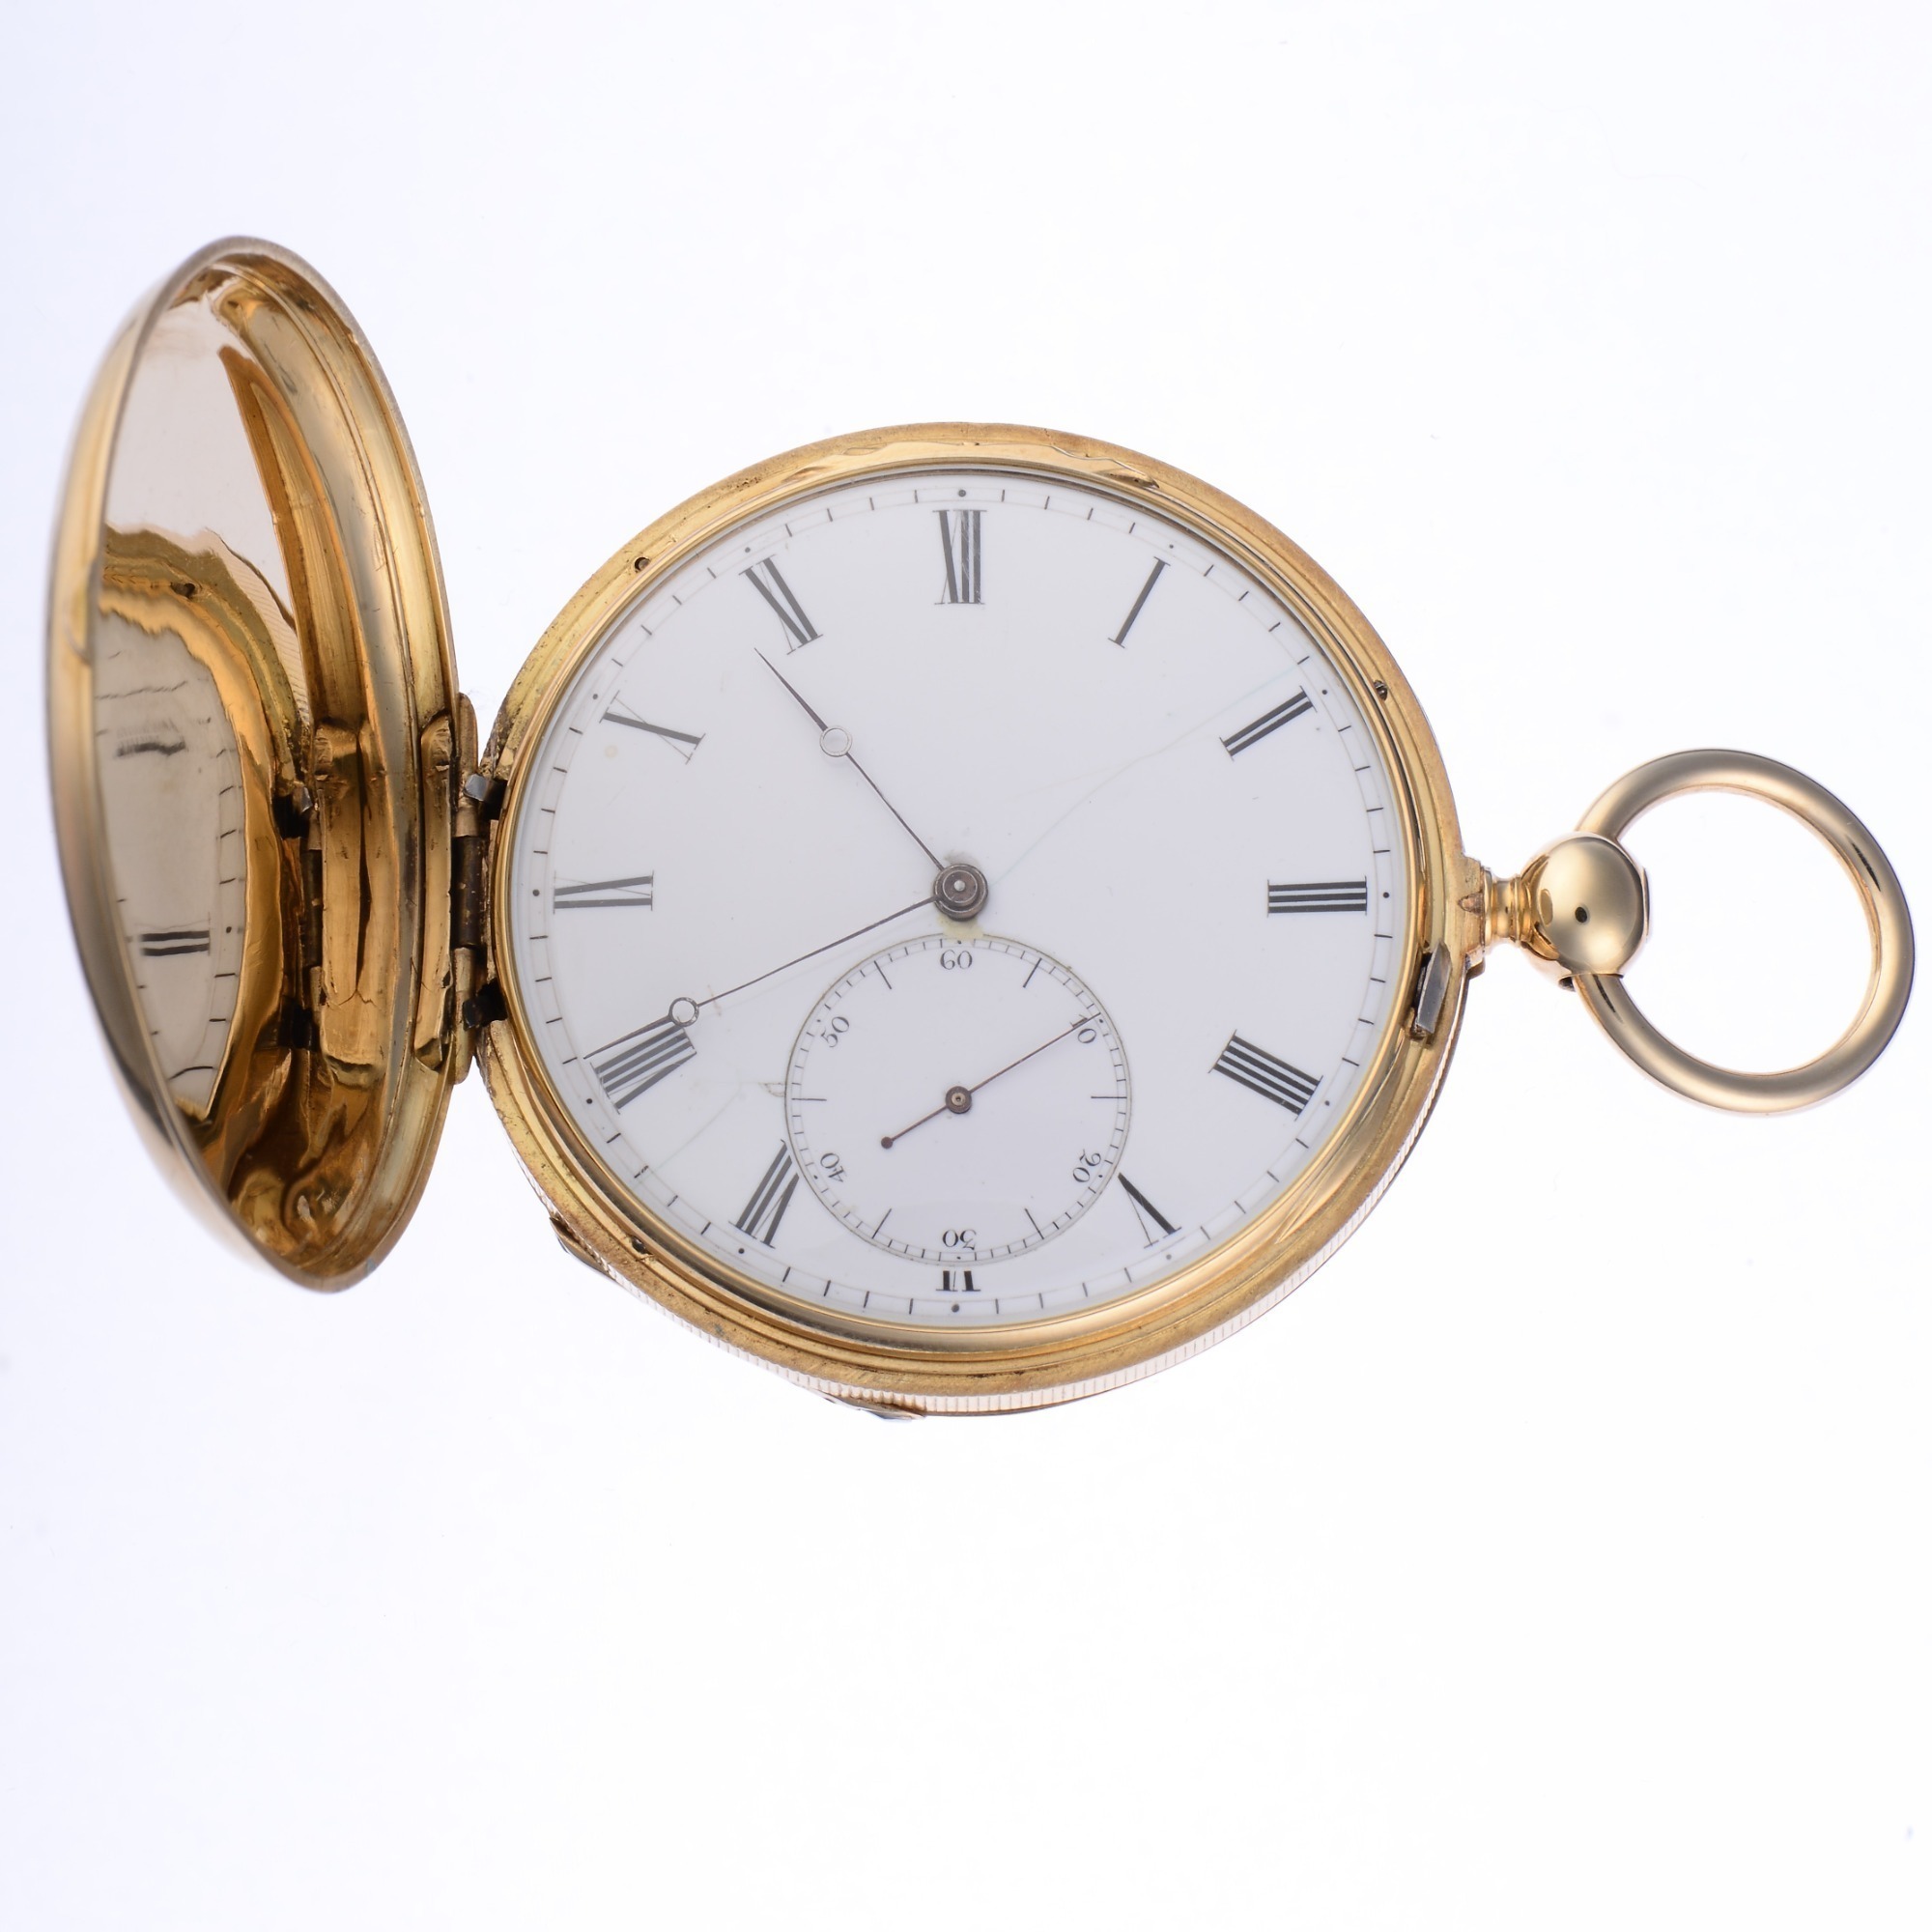 Ami Sandoz and Fils Detent Chronometer Key Wind Hunting Case Gold Pocket Watch